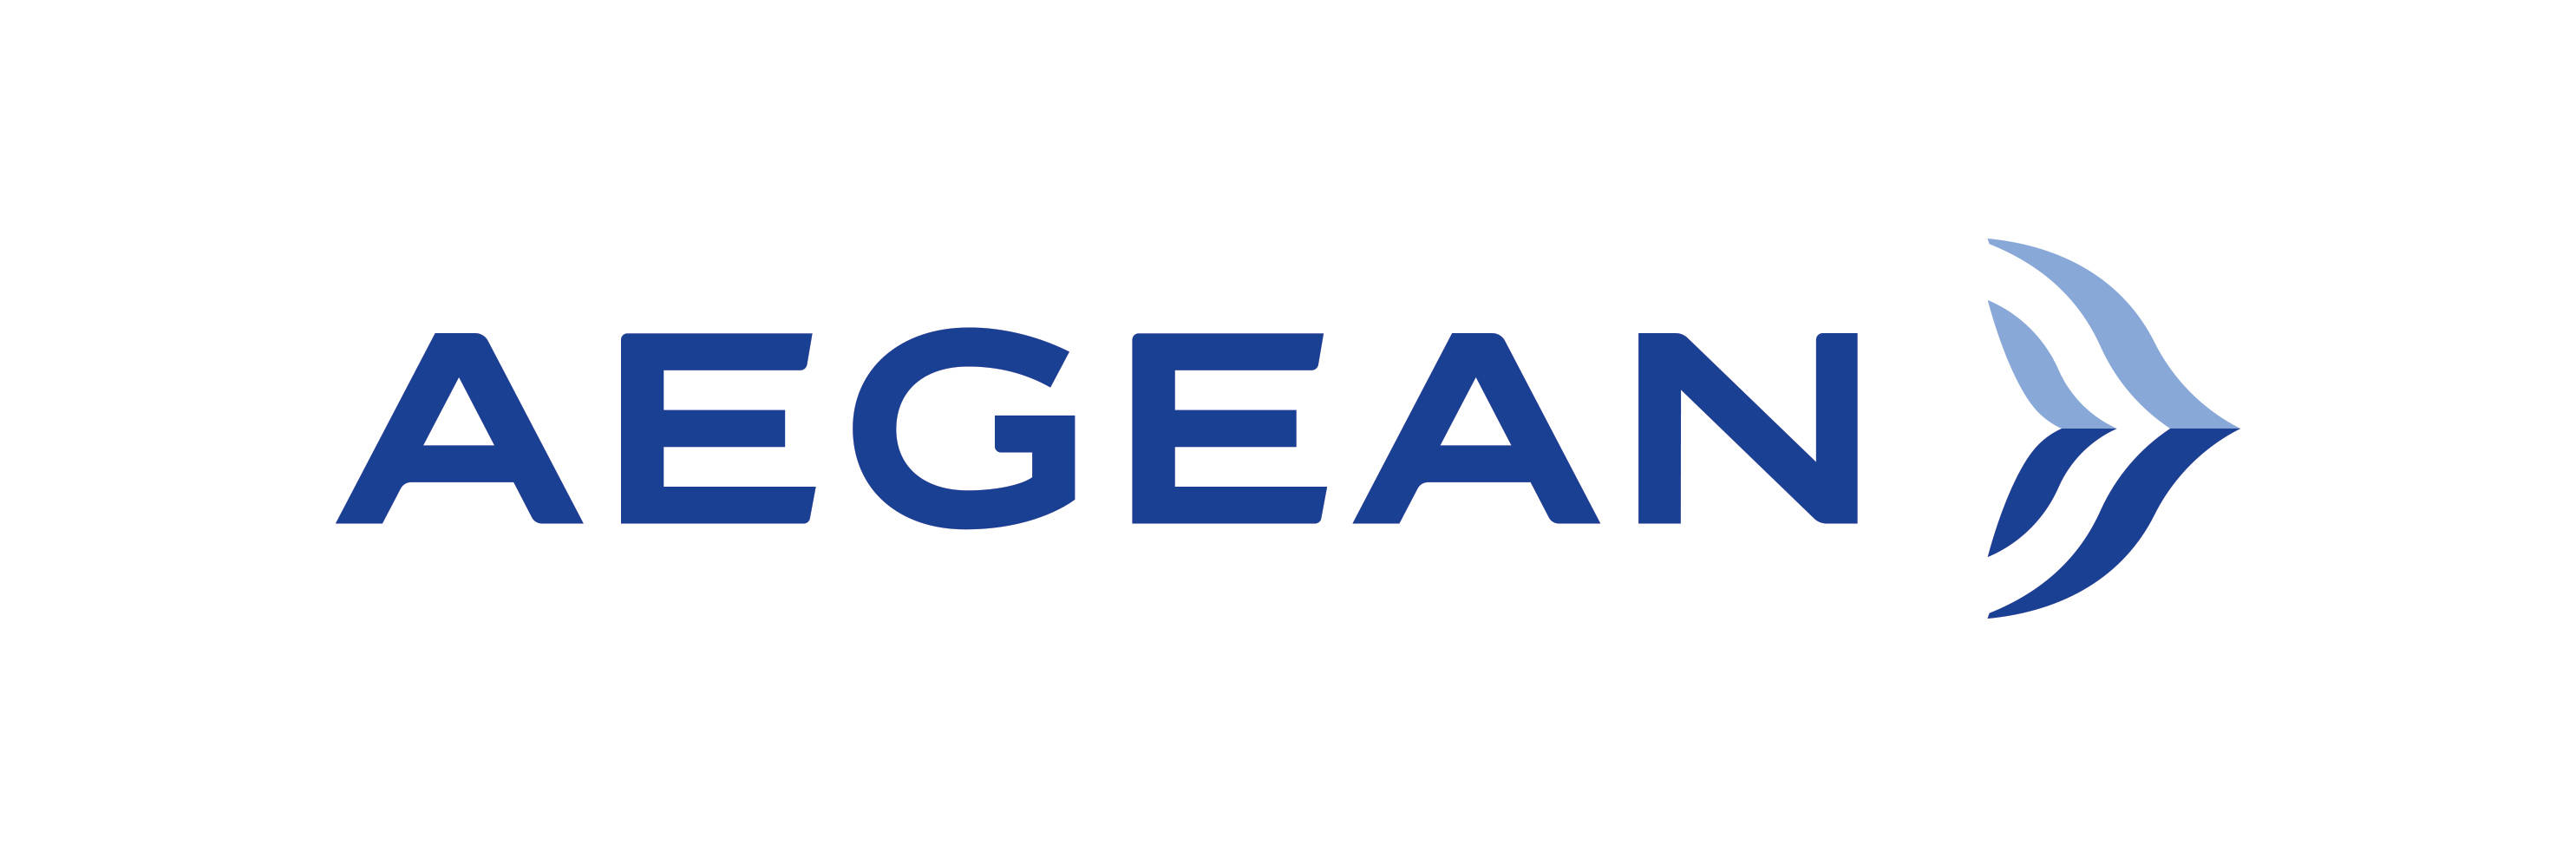 Minimalistic Aegean Airlines Flag Carrier Logo Wallpaper